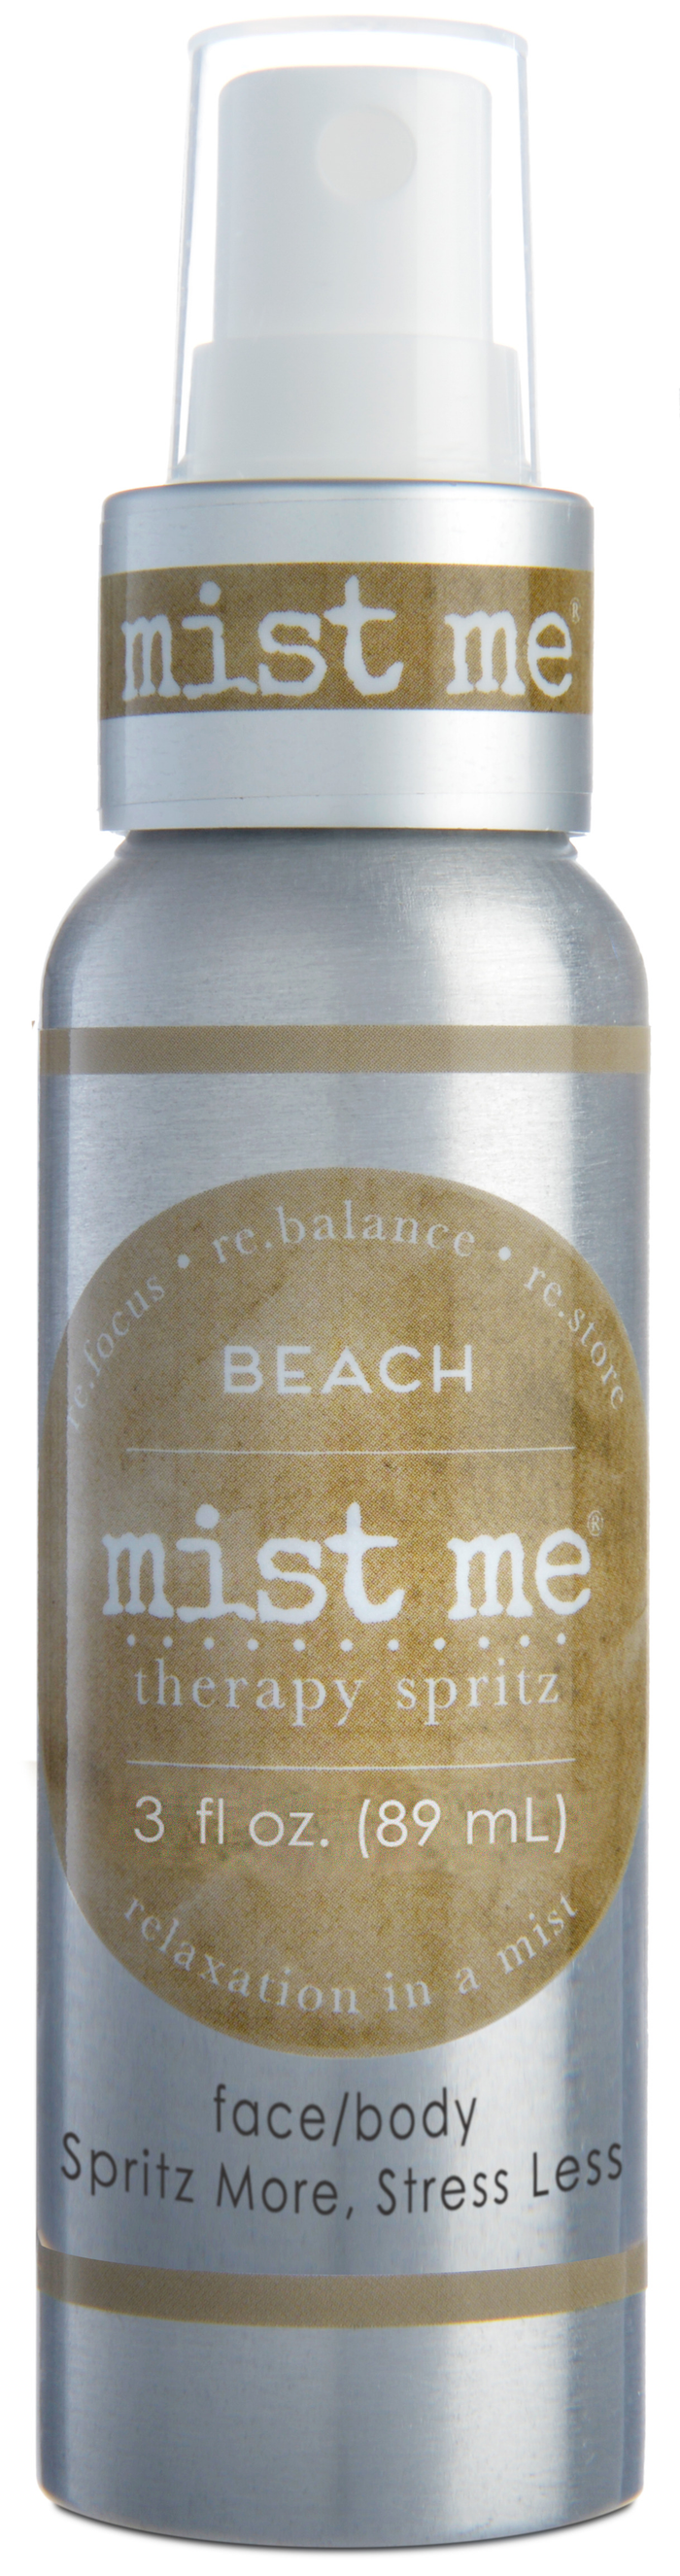 Beach Mist Me 3.0 oz.